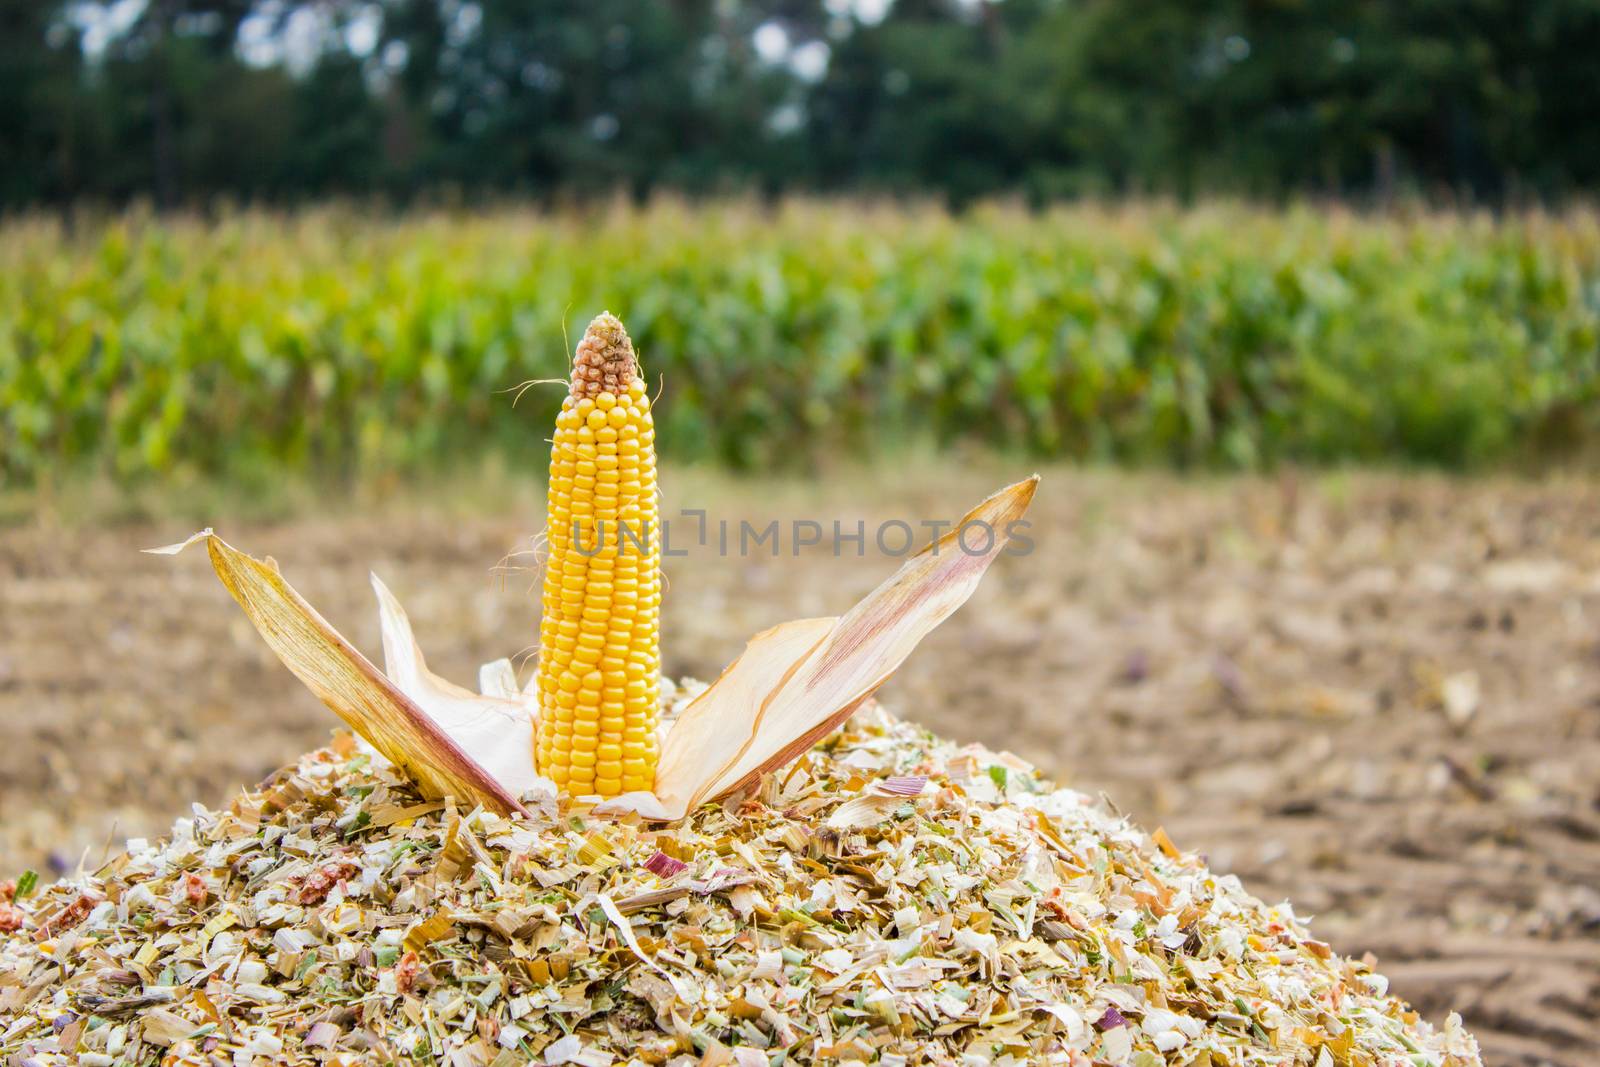 Corncob on chopped corn by BenSchonewille